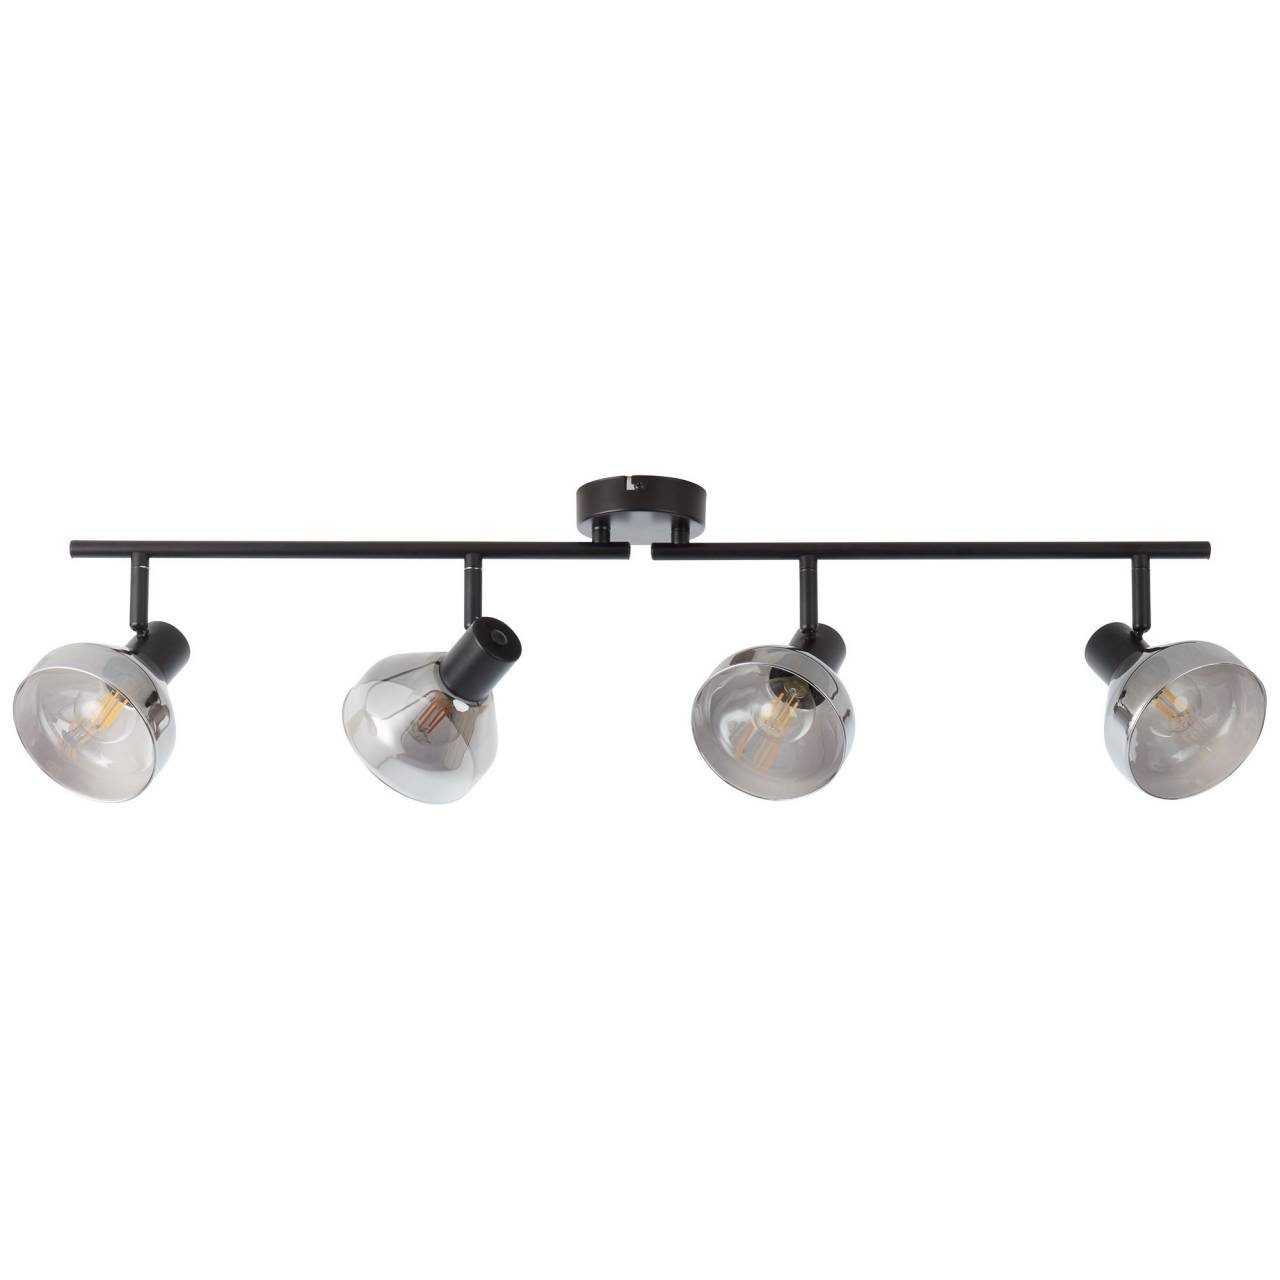 Brilliant E14, Lampe D45, Reflekt Deckenleuchte 4flg 4x Spotrohr Reflekt, schwarzmatt/rauchglas 18W